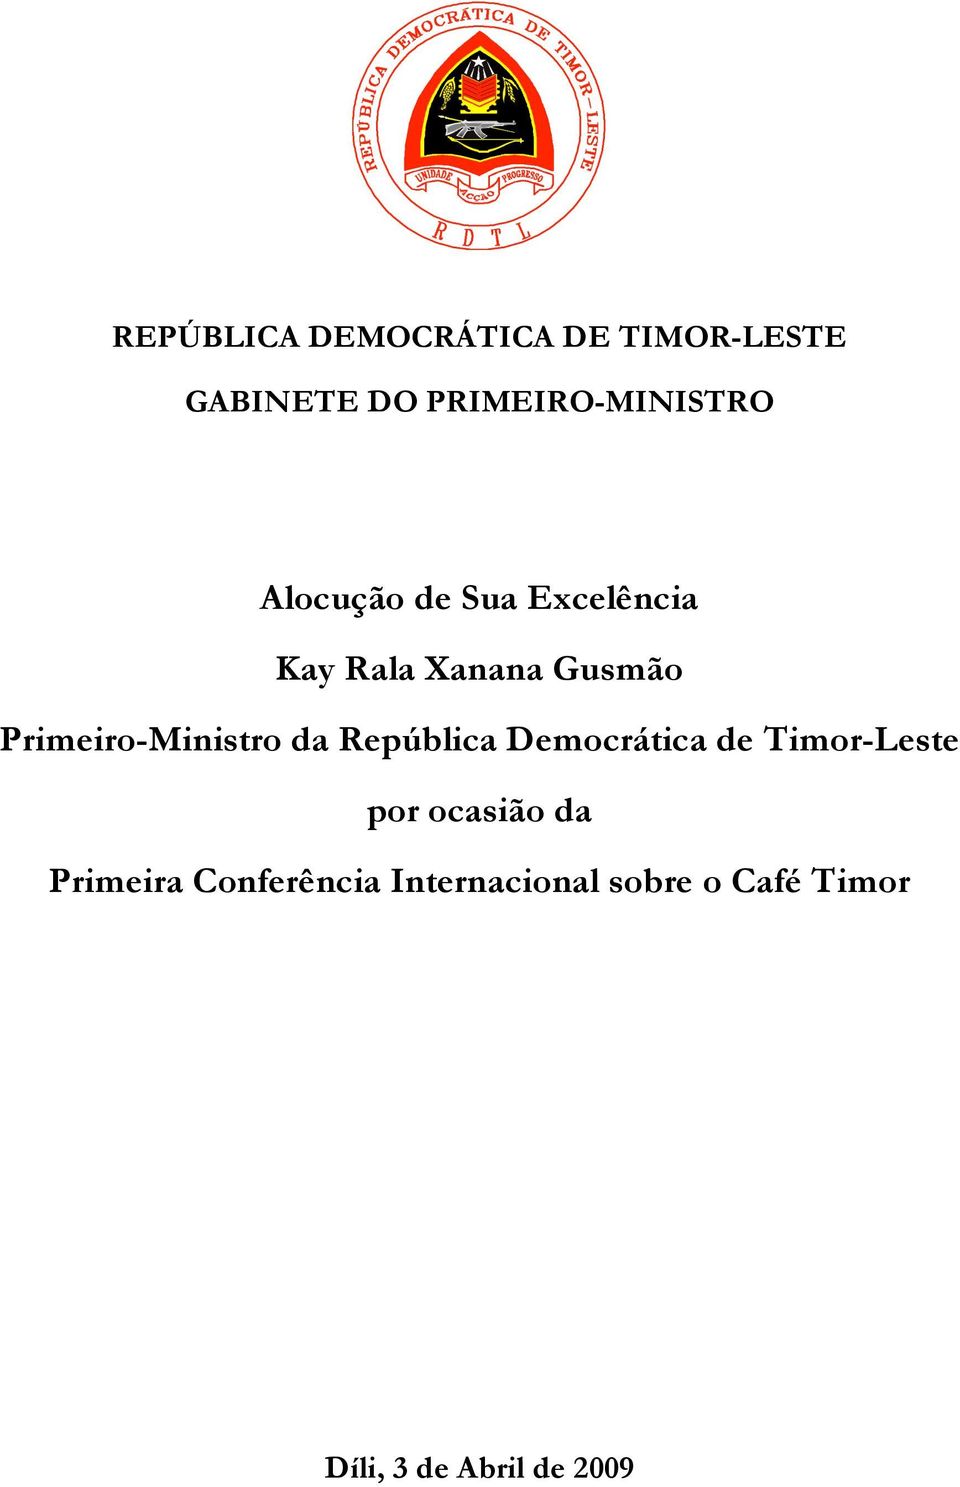 Primeiro-Ministro da República Democrática de Timor-Leste por